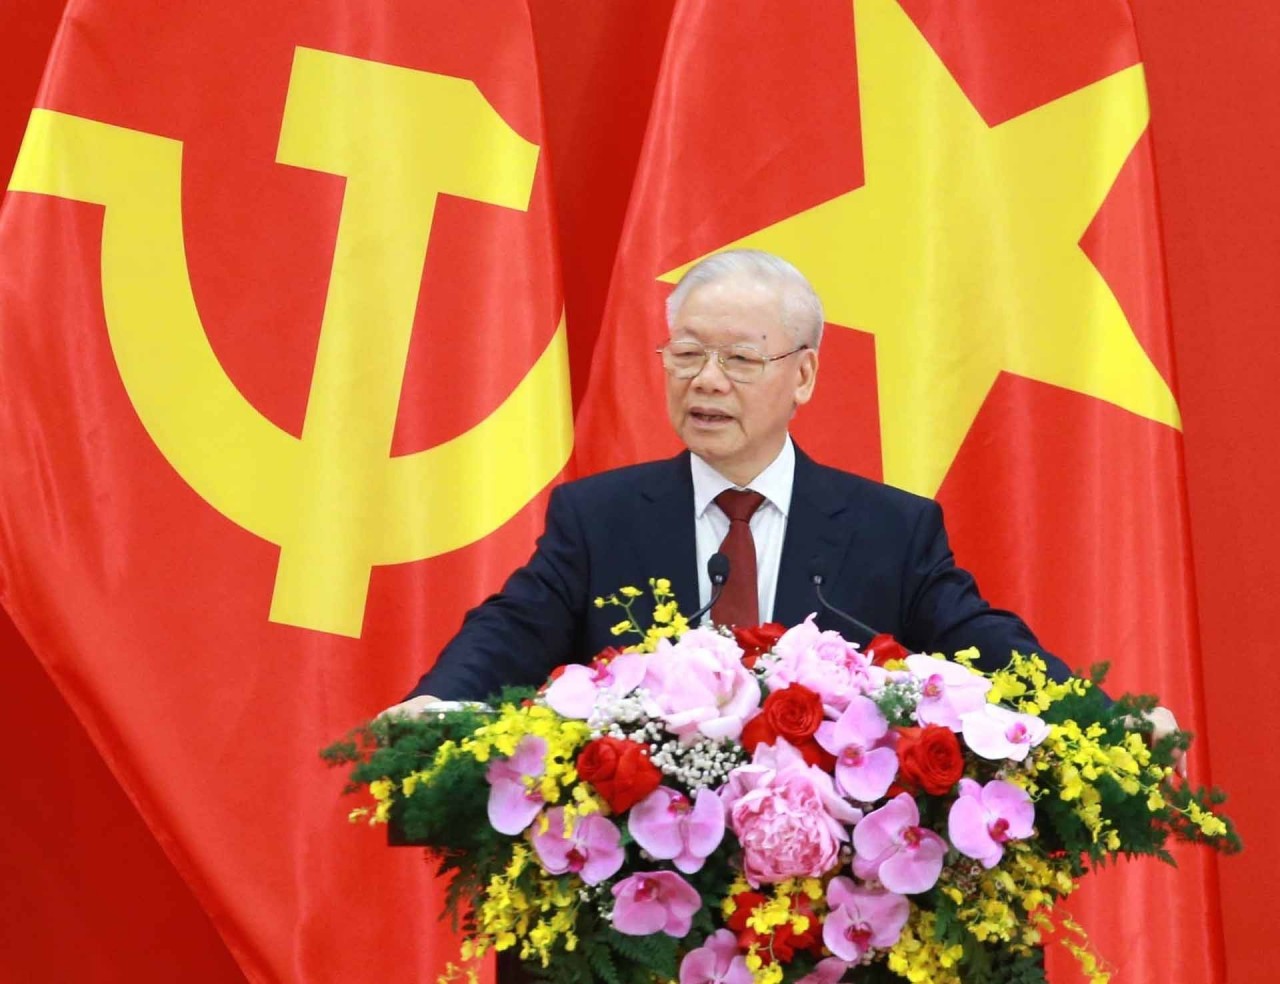 Party General Secretary’s article charts vision to build strong Vietnam: General Secretary Nguyen Phu Trong. (Photo: VNA)